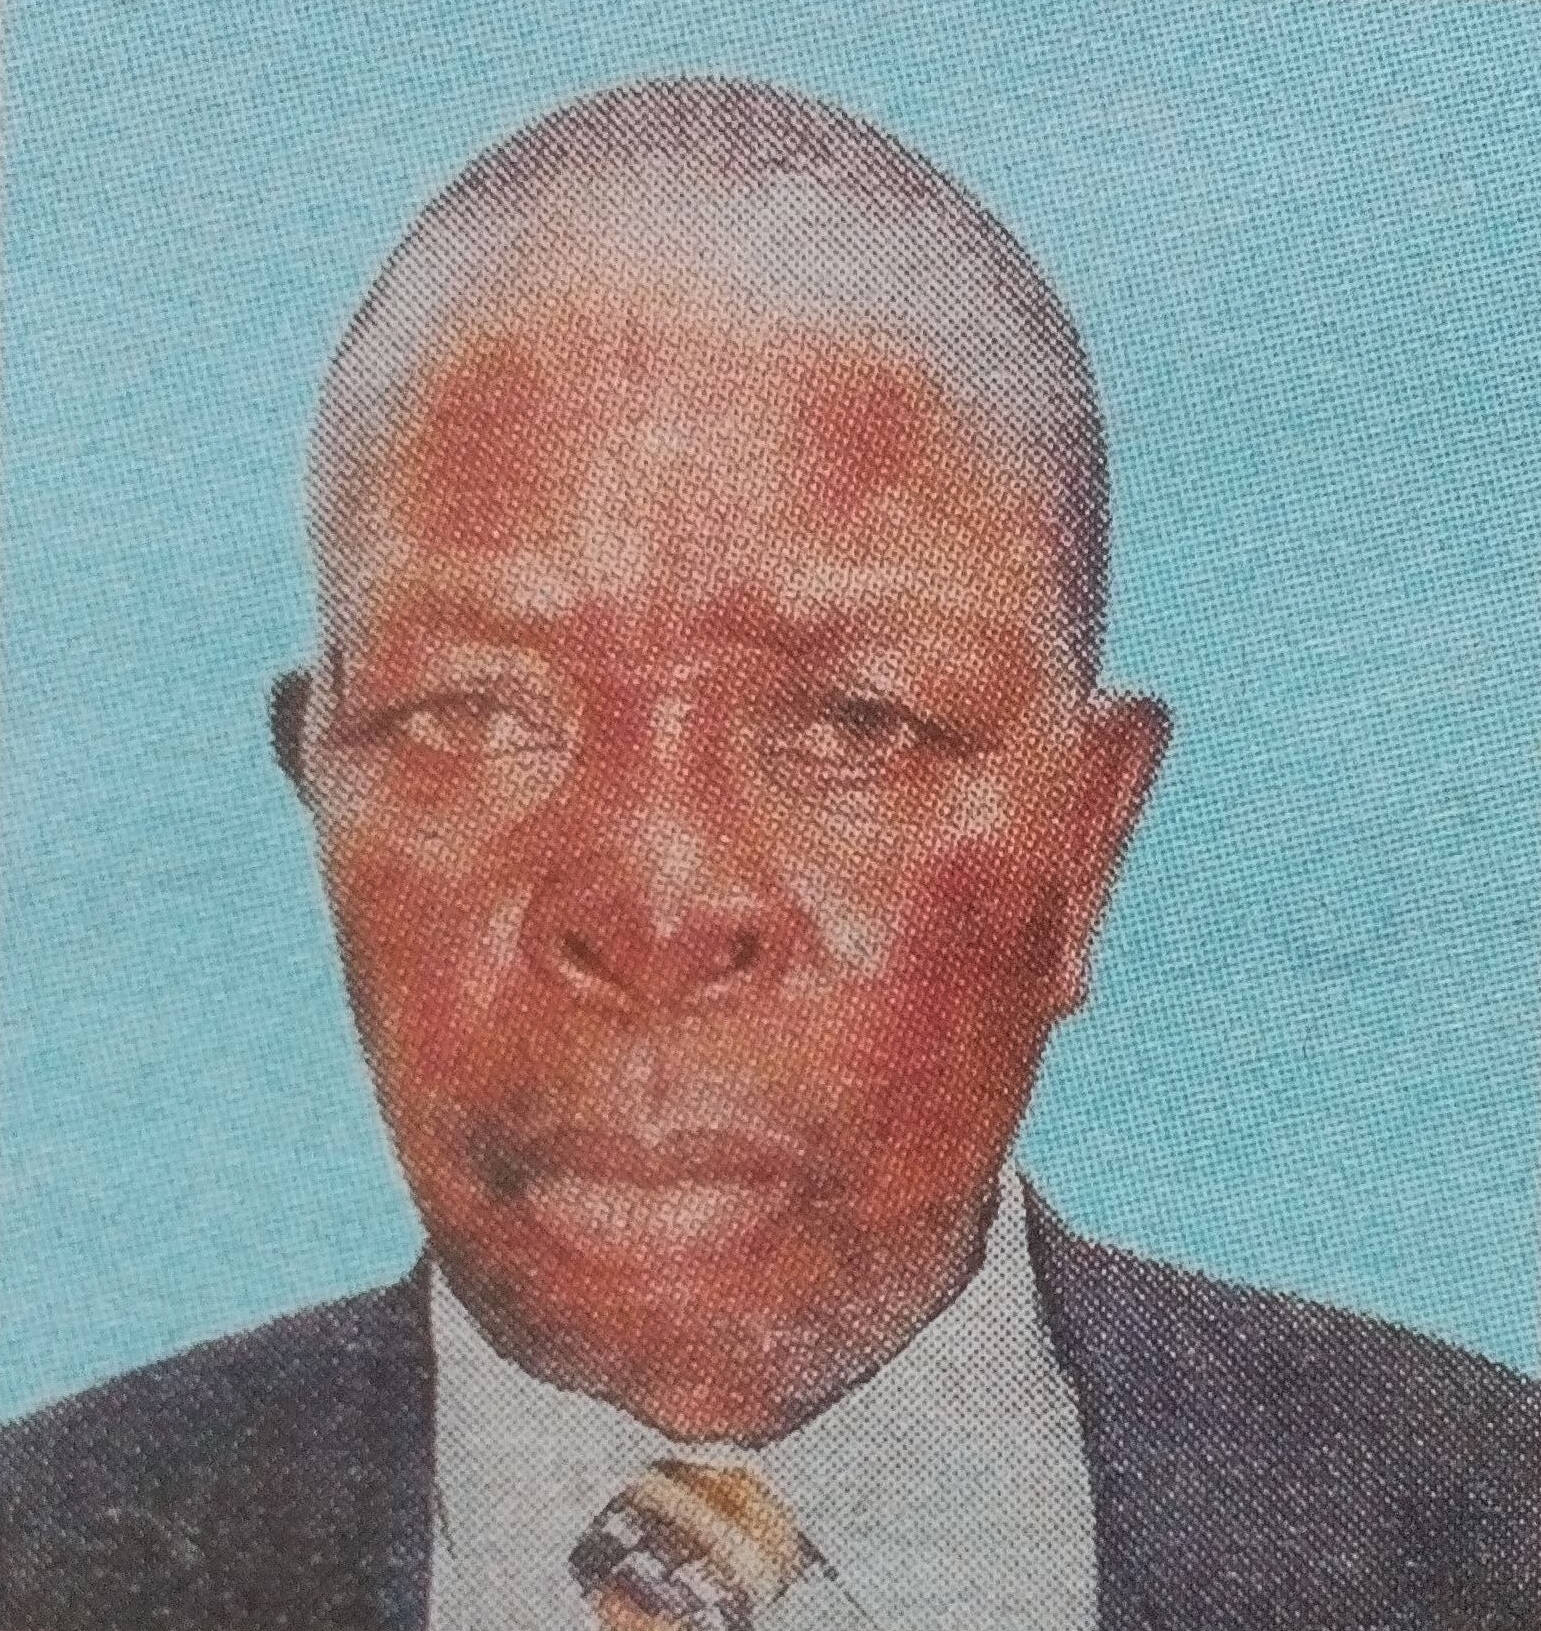 Obituary Image of David Nyabuti Nyabende